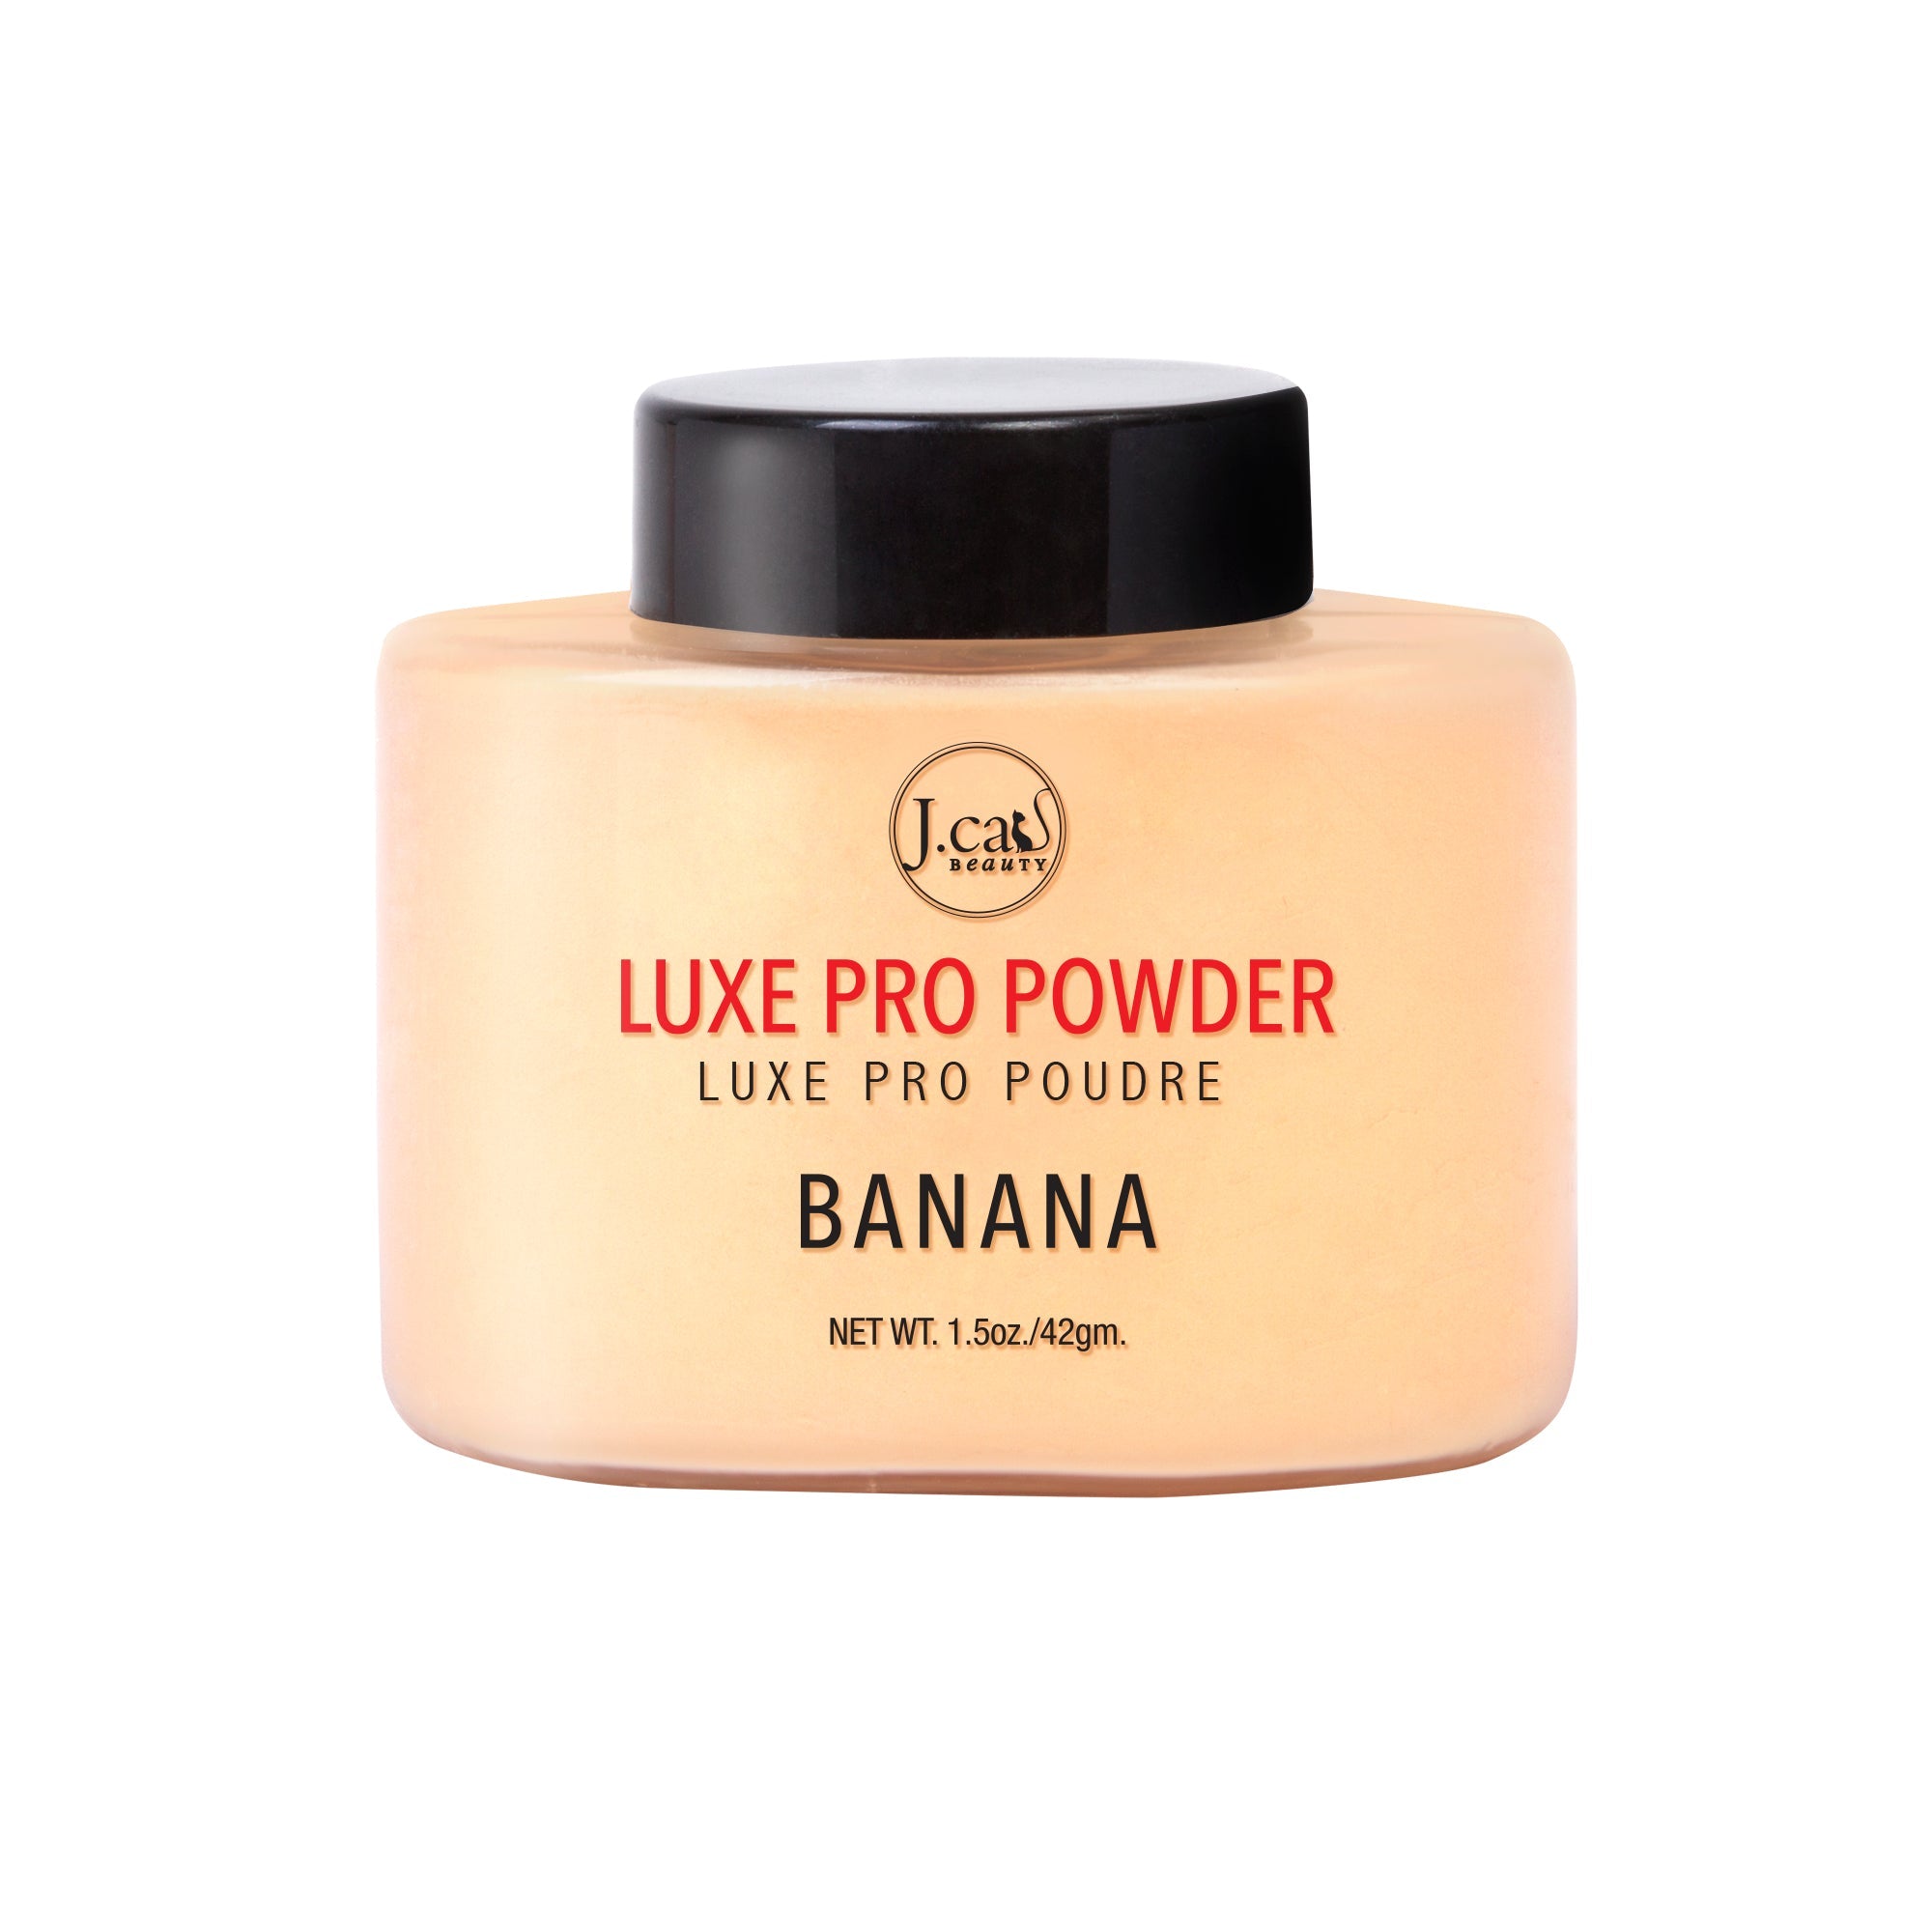 J.Cat Beauty - Luxe Pro Powder Banana